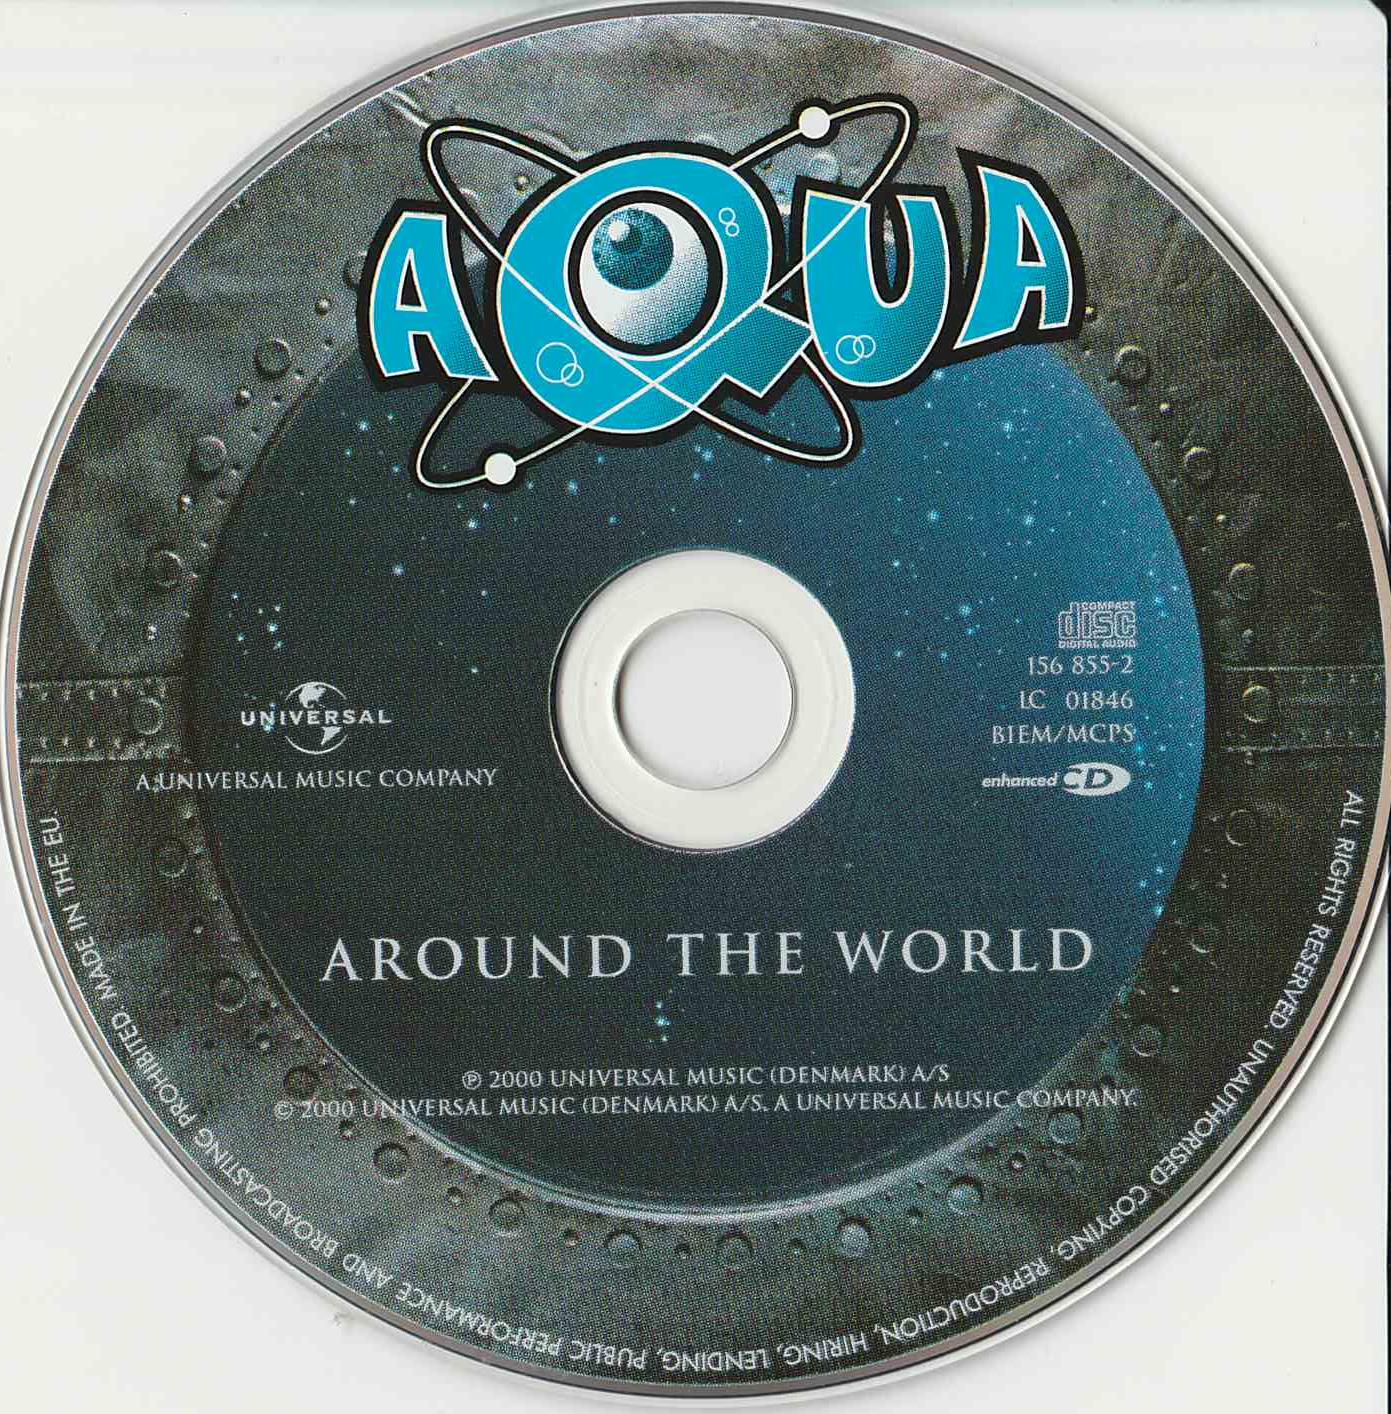 Aqua around. Гр. Aqua around the World. Aqua around the World. Ароунд тхе ворлд текст. Эраунд зе ворлд перевод.